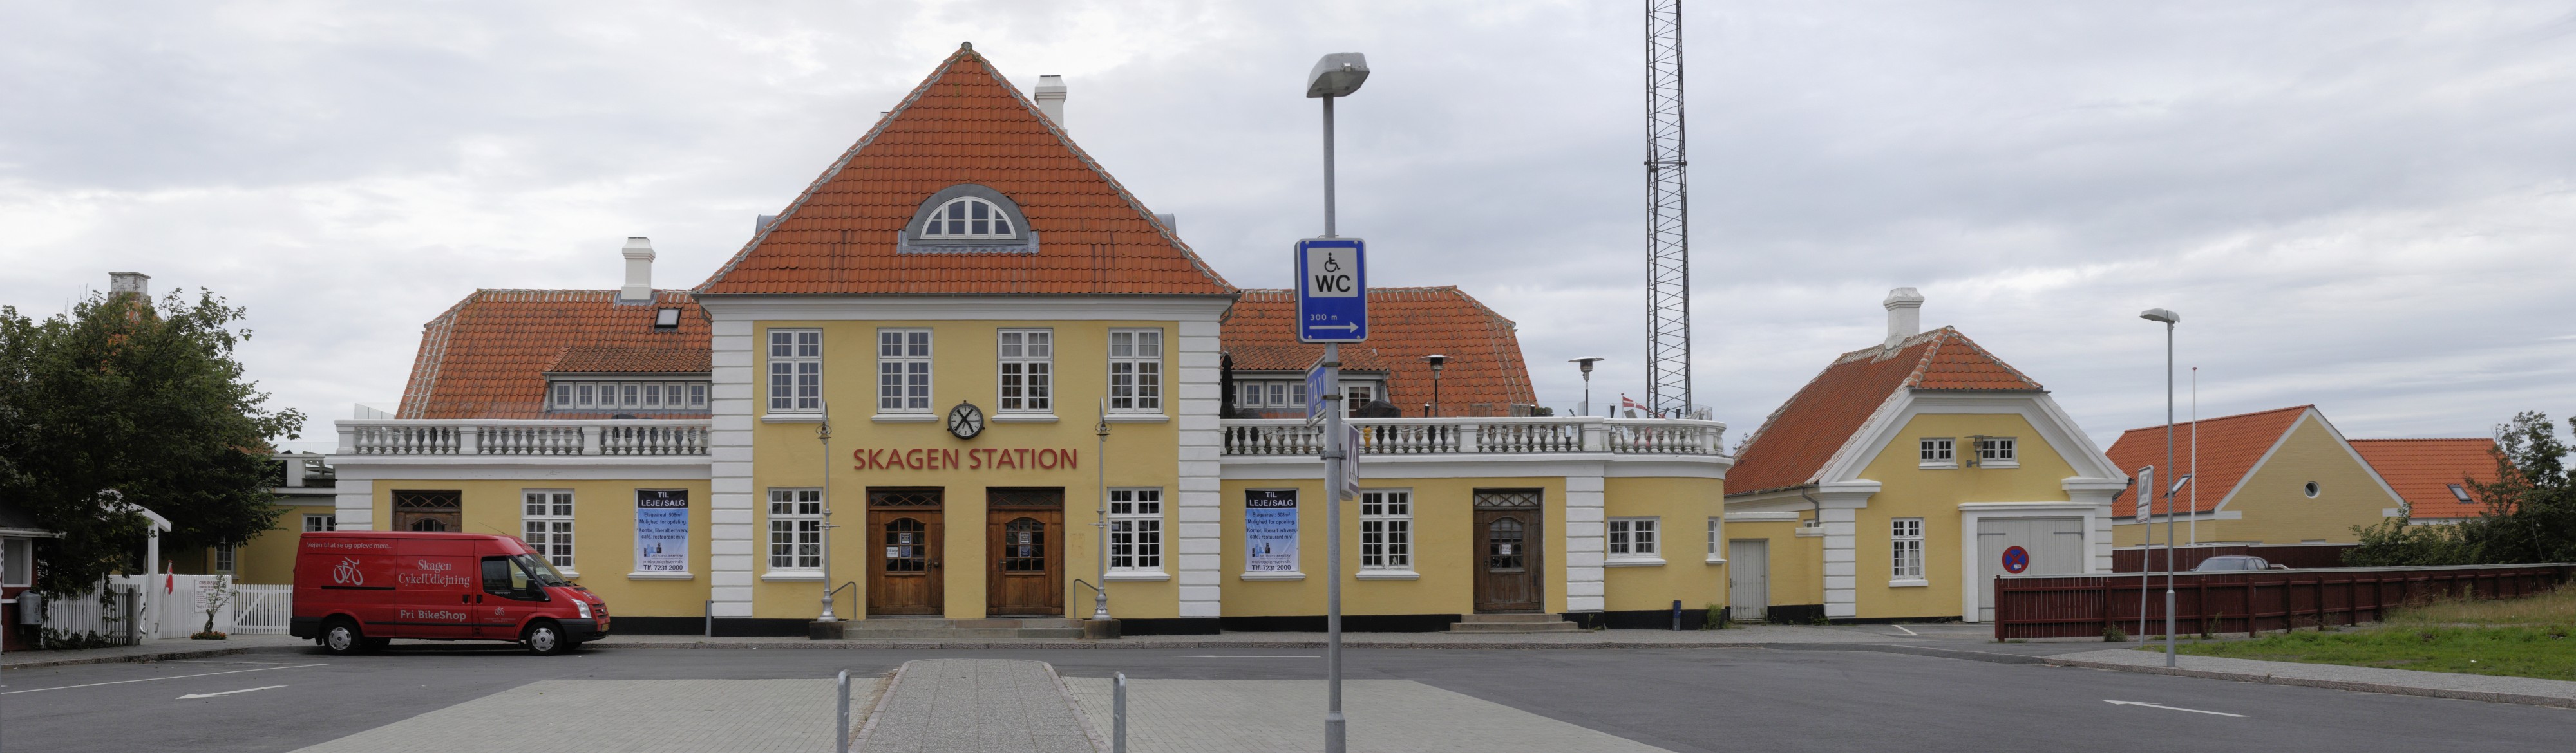 Skagen Station